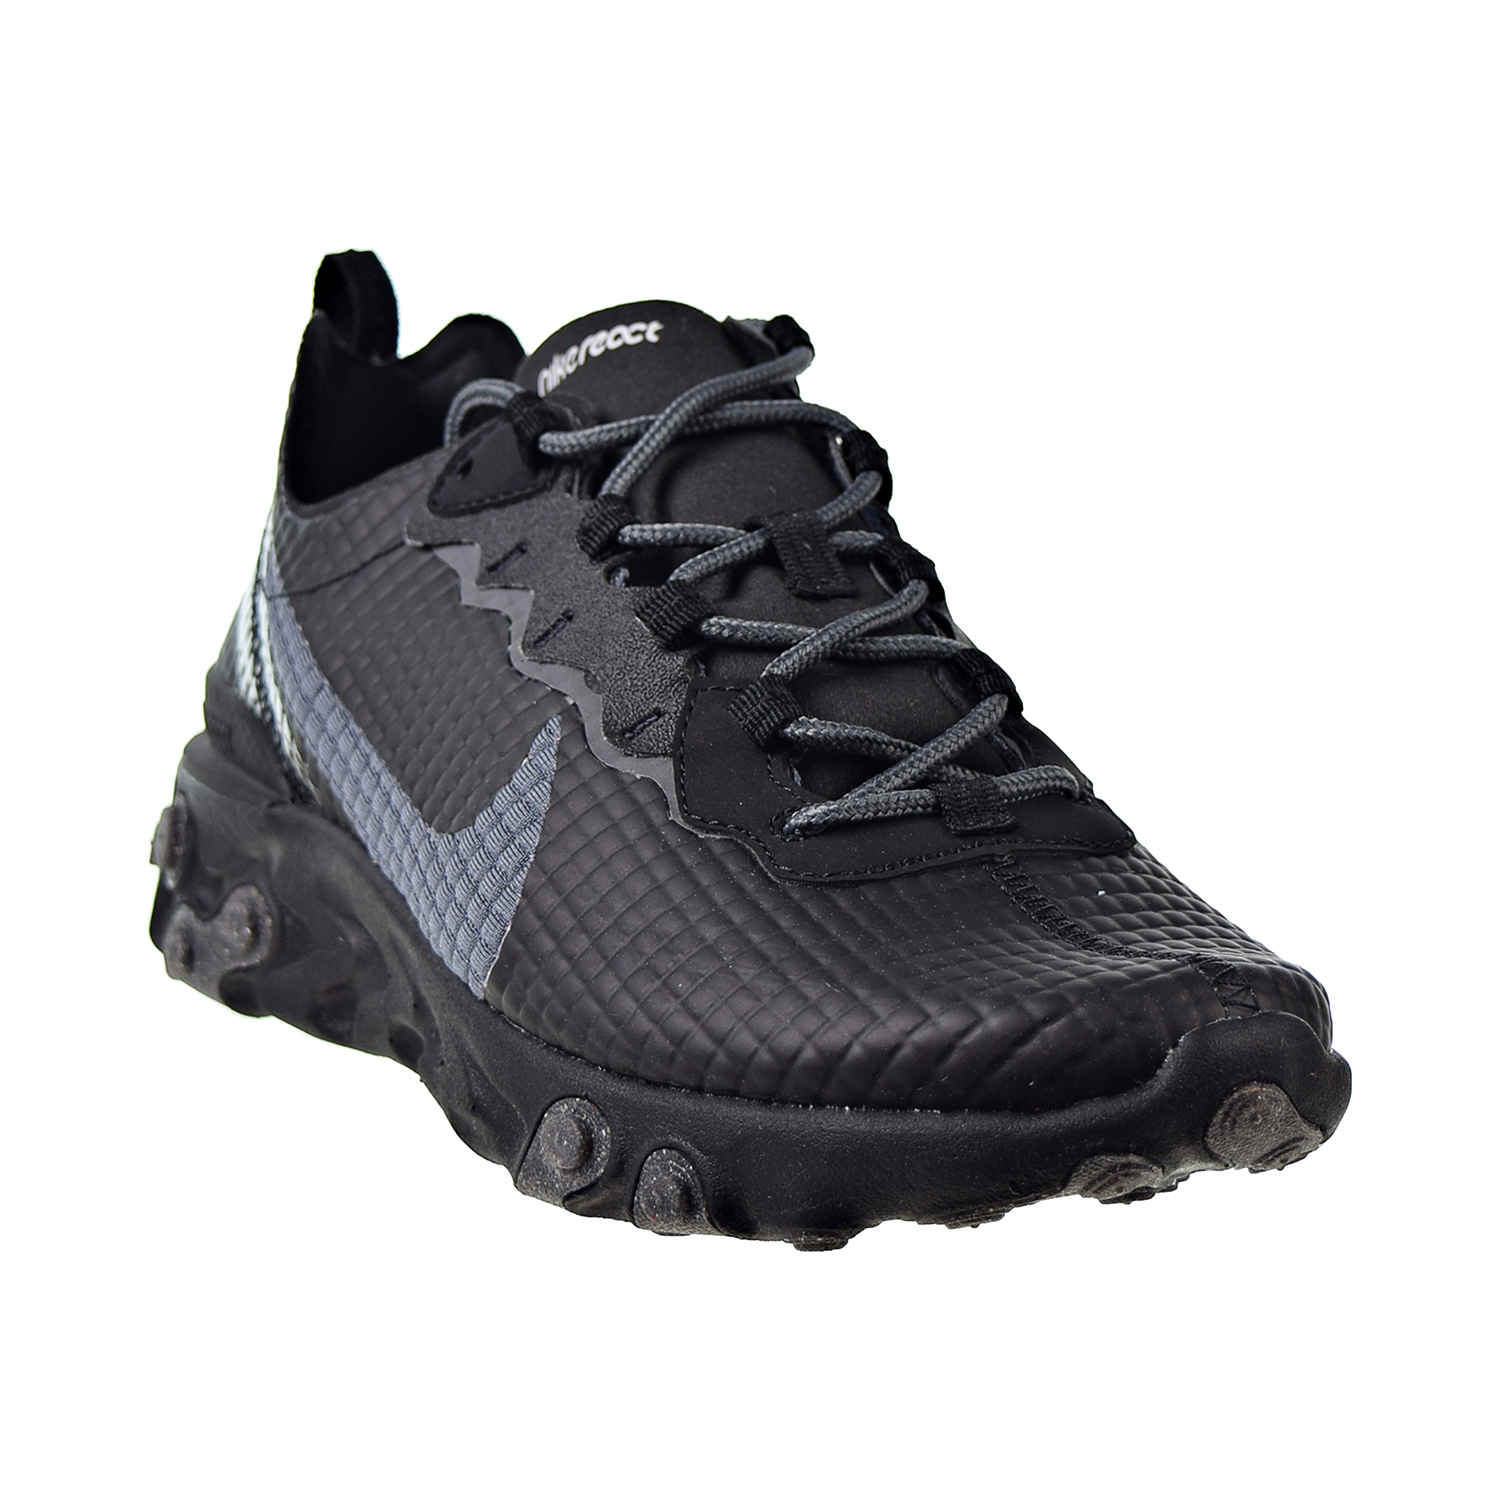 Nike React Element 55 PRM Men's Shoes Black-Dark Grey-Anthracite ci3835-002 - image 2 of 6